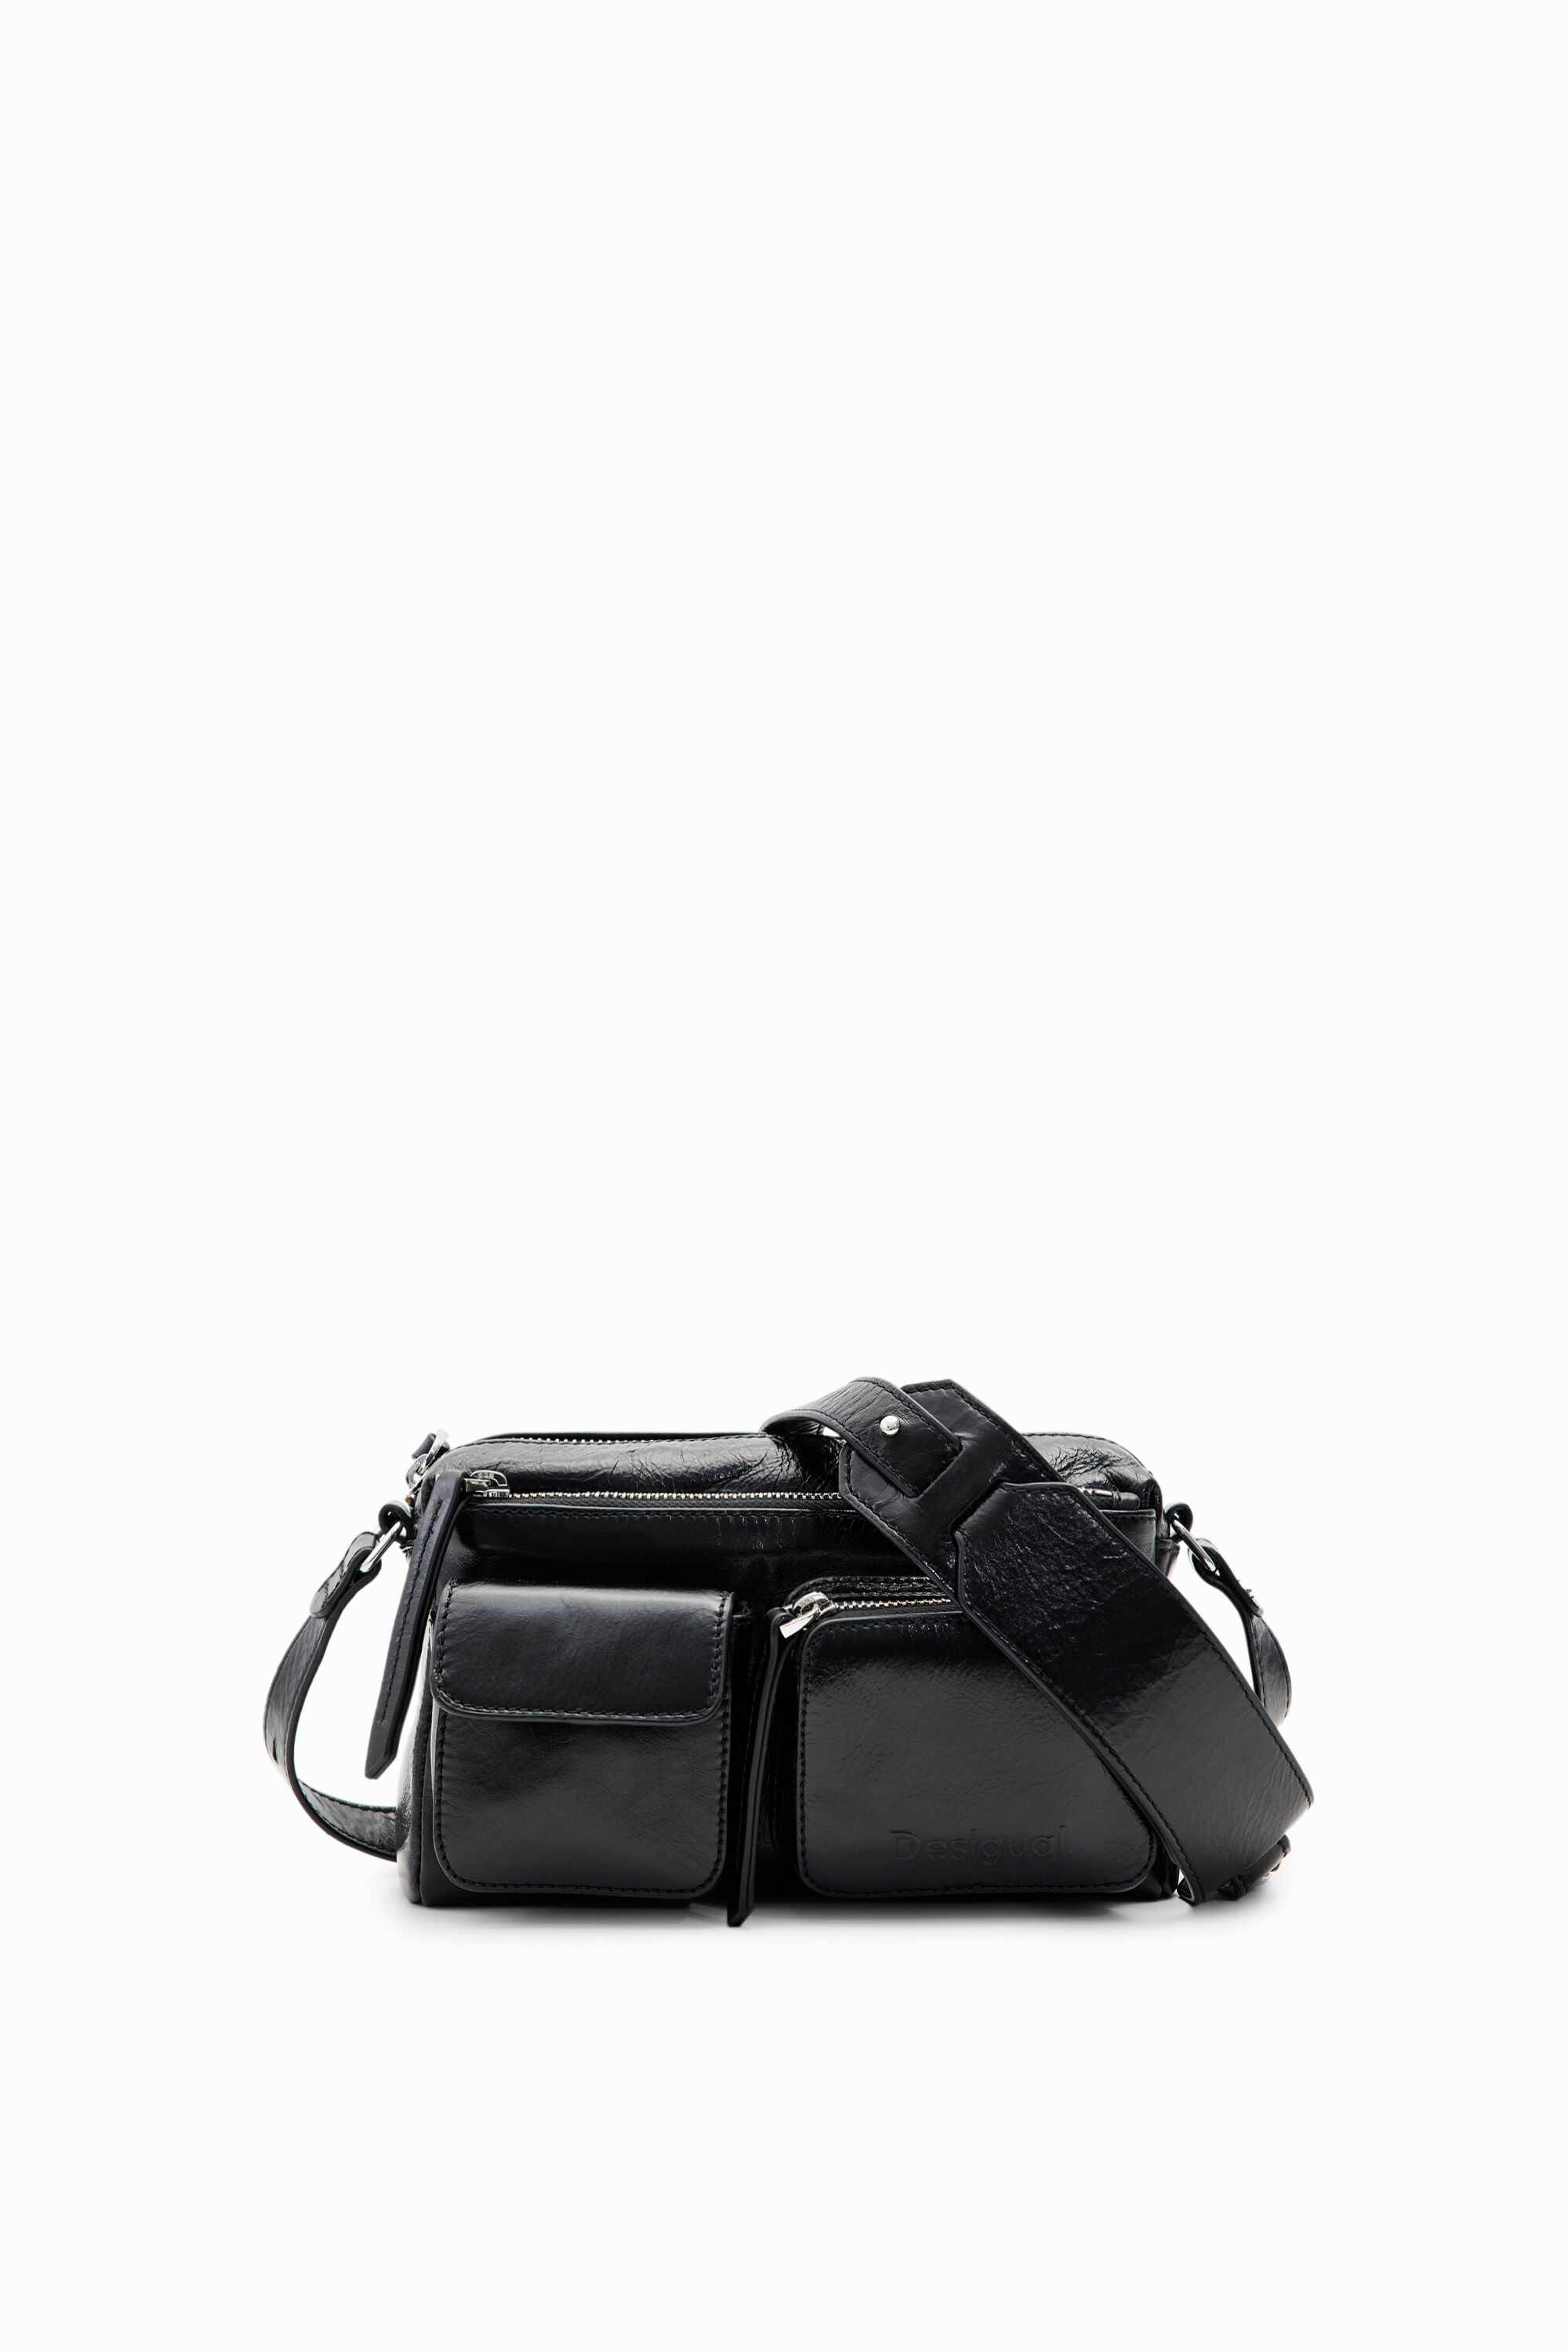 Leather Small Cross Body/sling bag Coruna - Black | Greenwood Leather